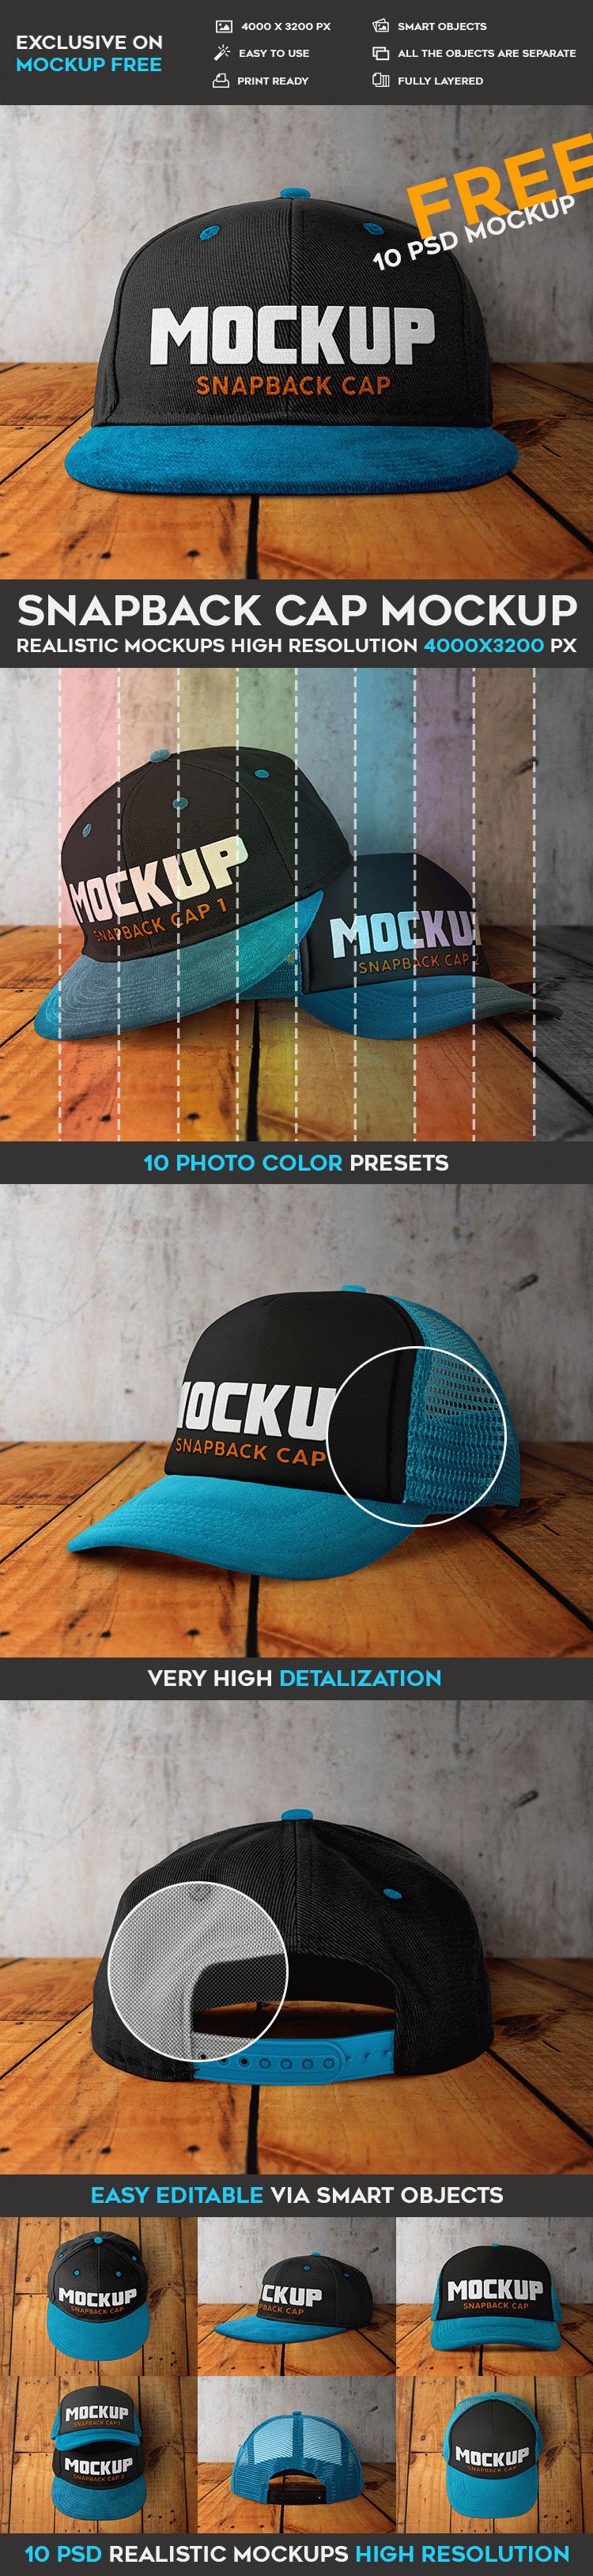 Snapback Cap - 10 Free PSD Mockups | Download